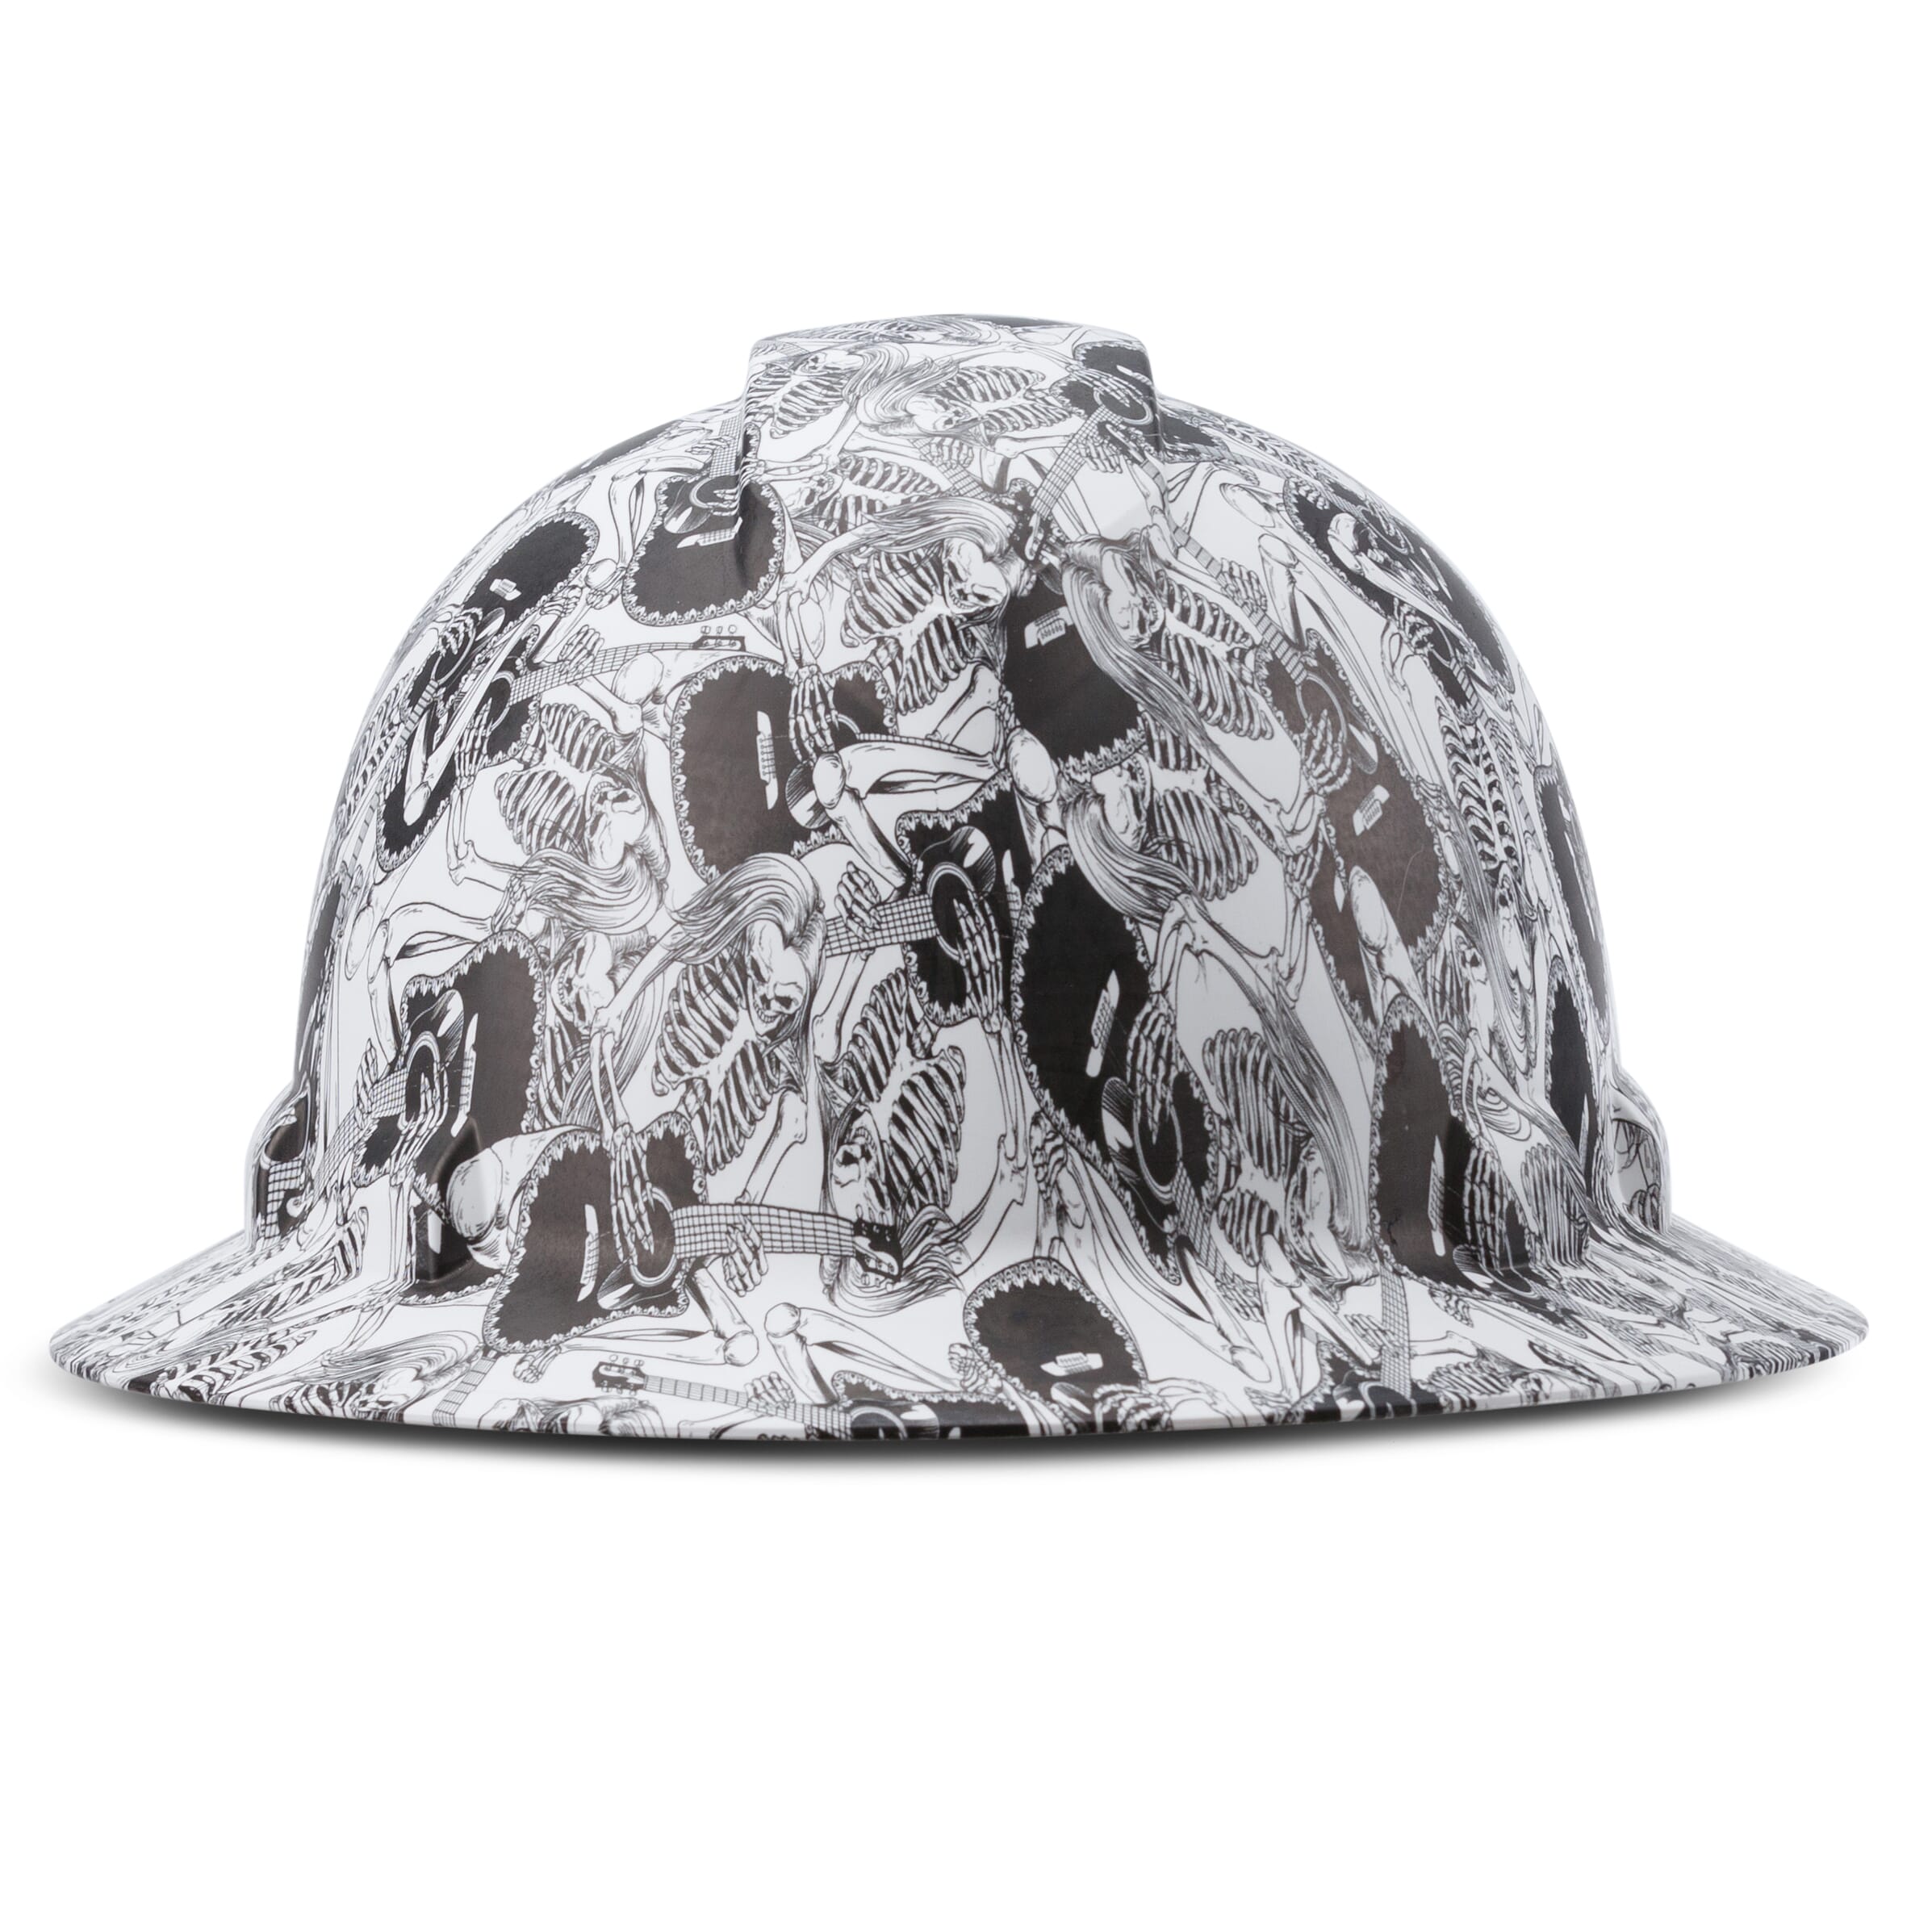 Full Brim Pyramex Hard Hat, Custom Acoustic Apocalypse Design, Safety Helmet, 6 Point